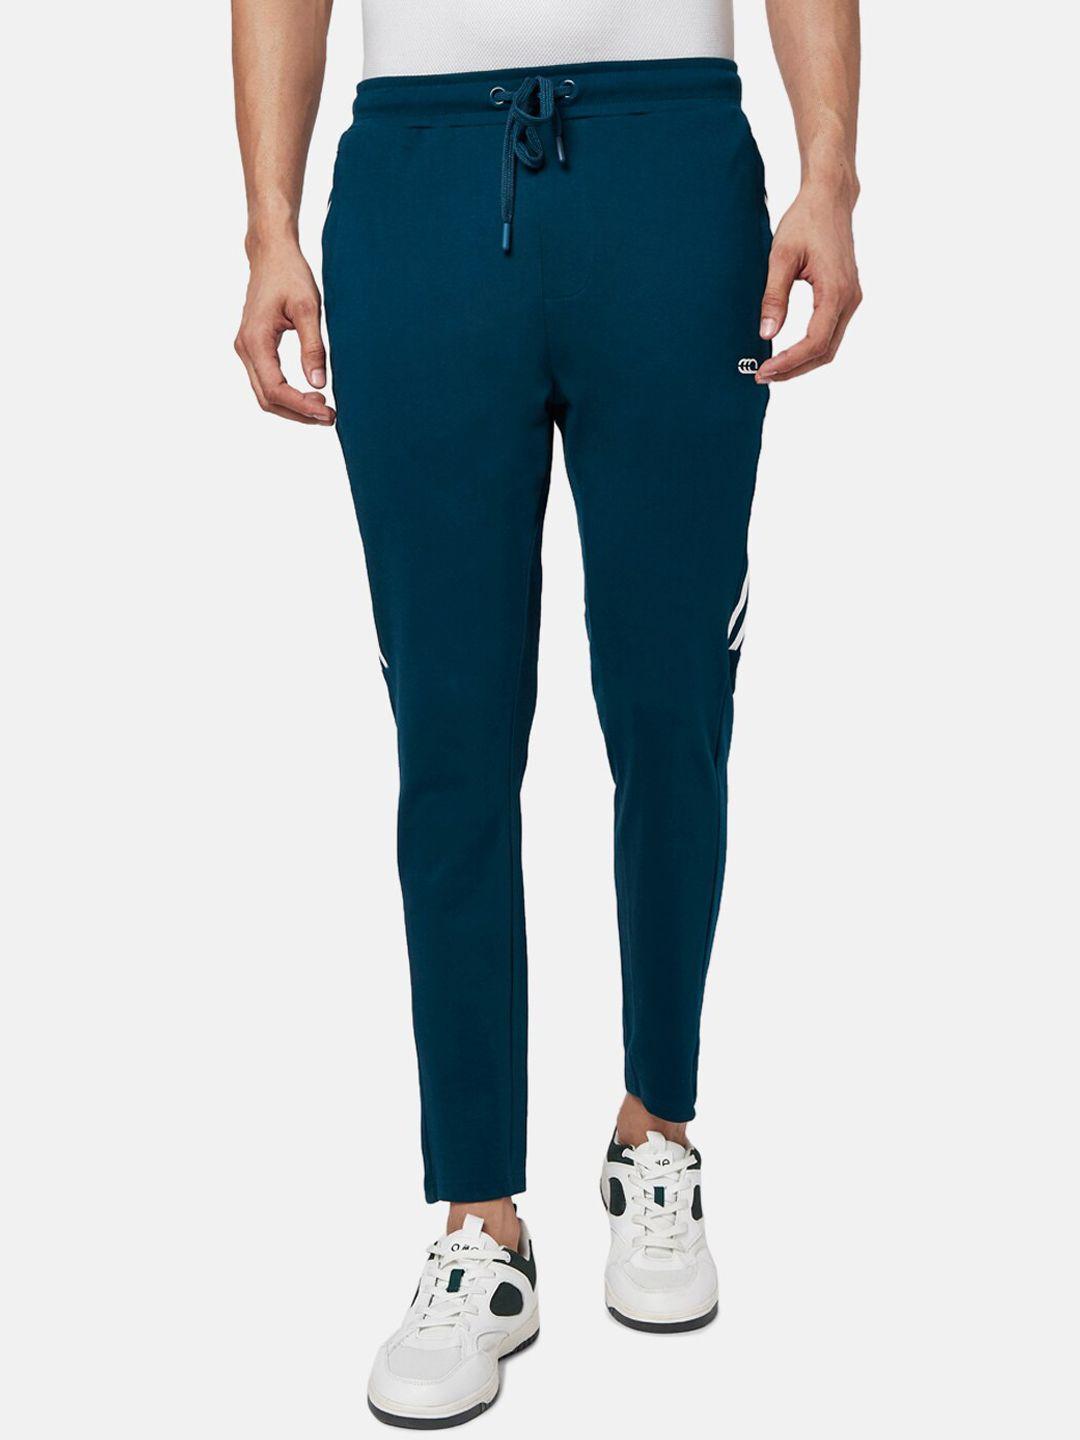 ajile by pantaloons men teal blue solid slim-fit track pant